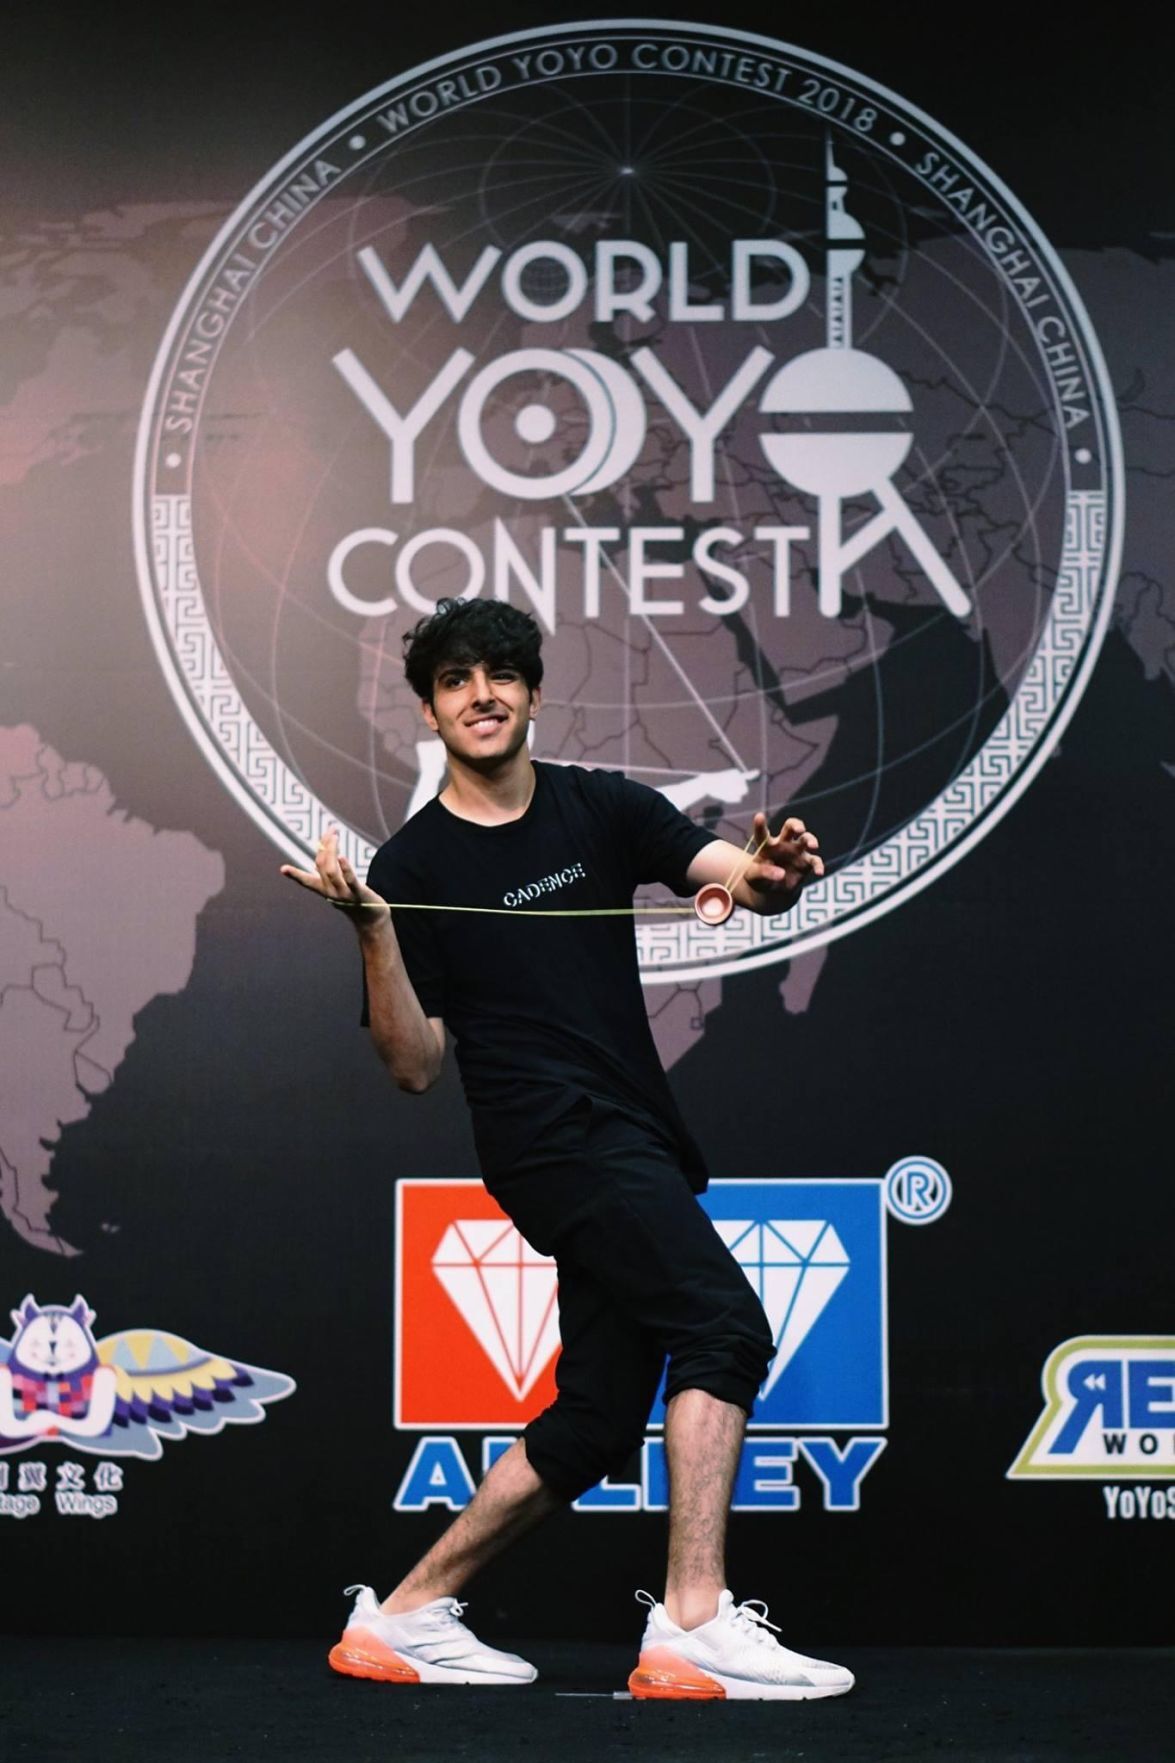 Professional Napan yo-yoer spins his way into series | Local napavalleyregister.com